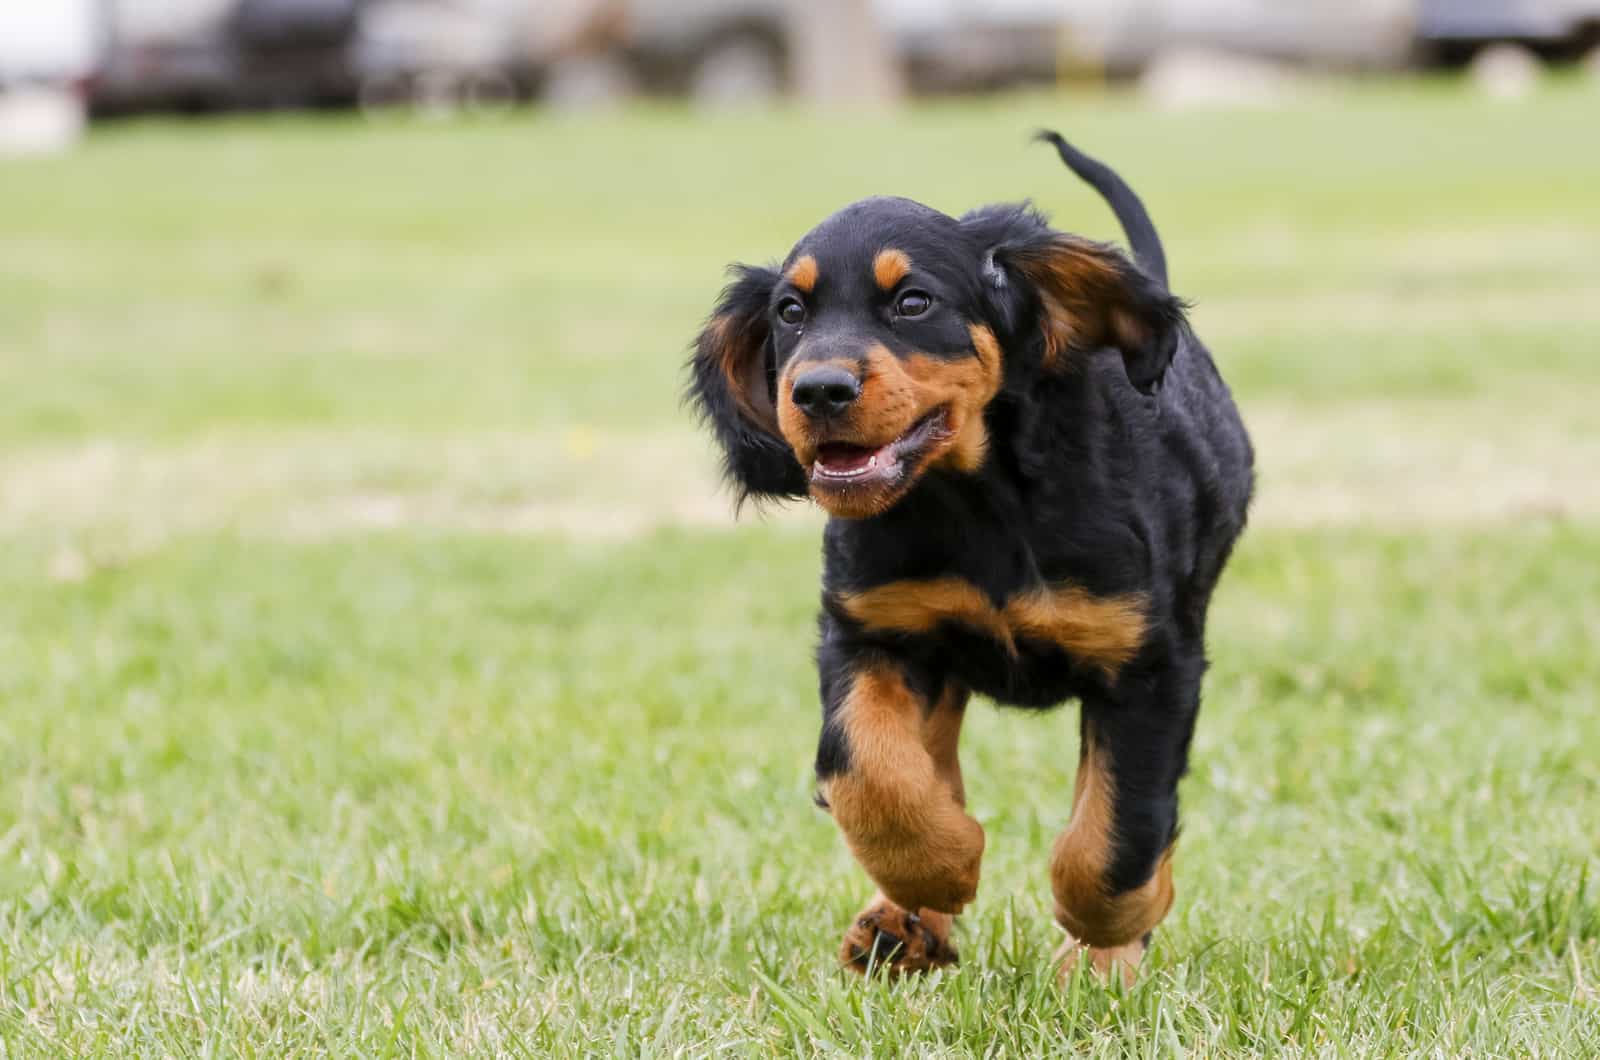 Gordon Setter puppy runs across the field